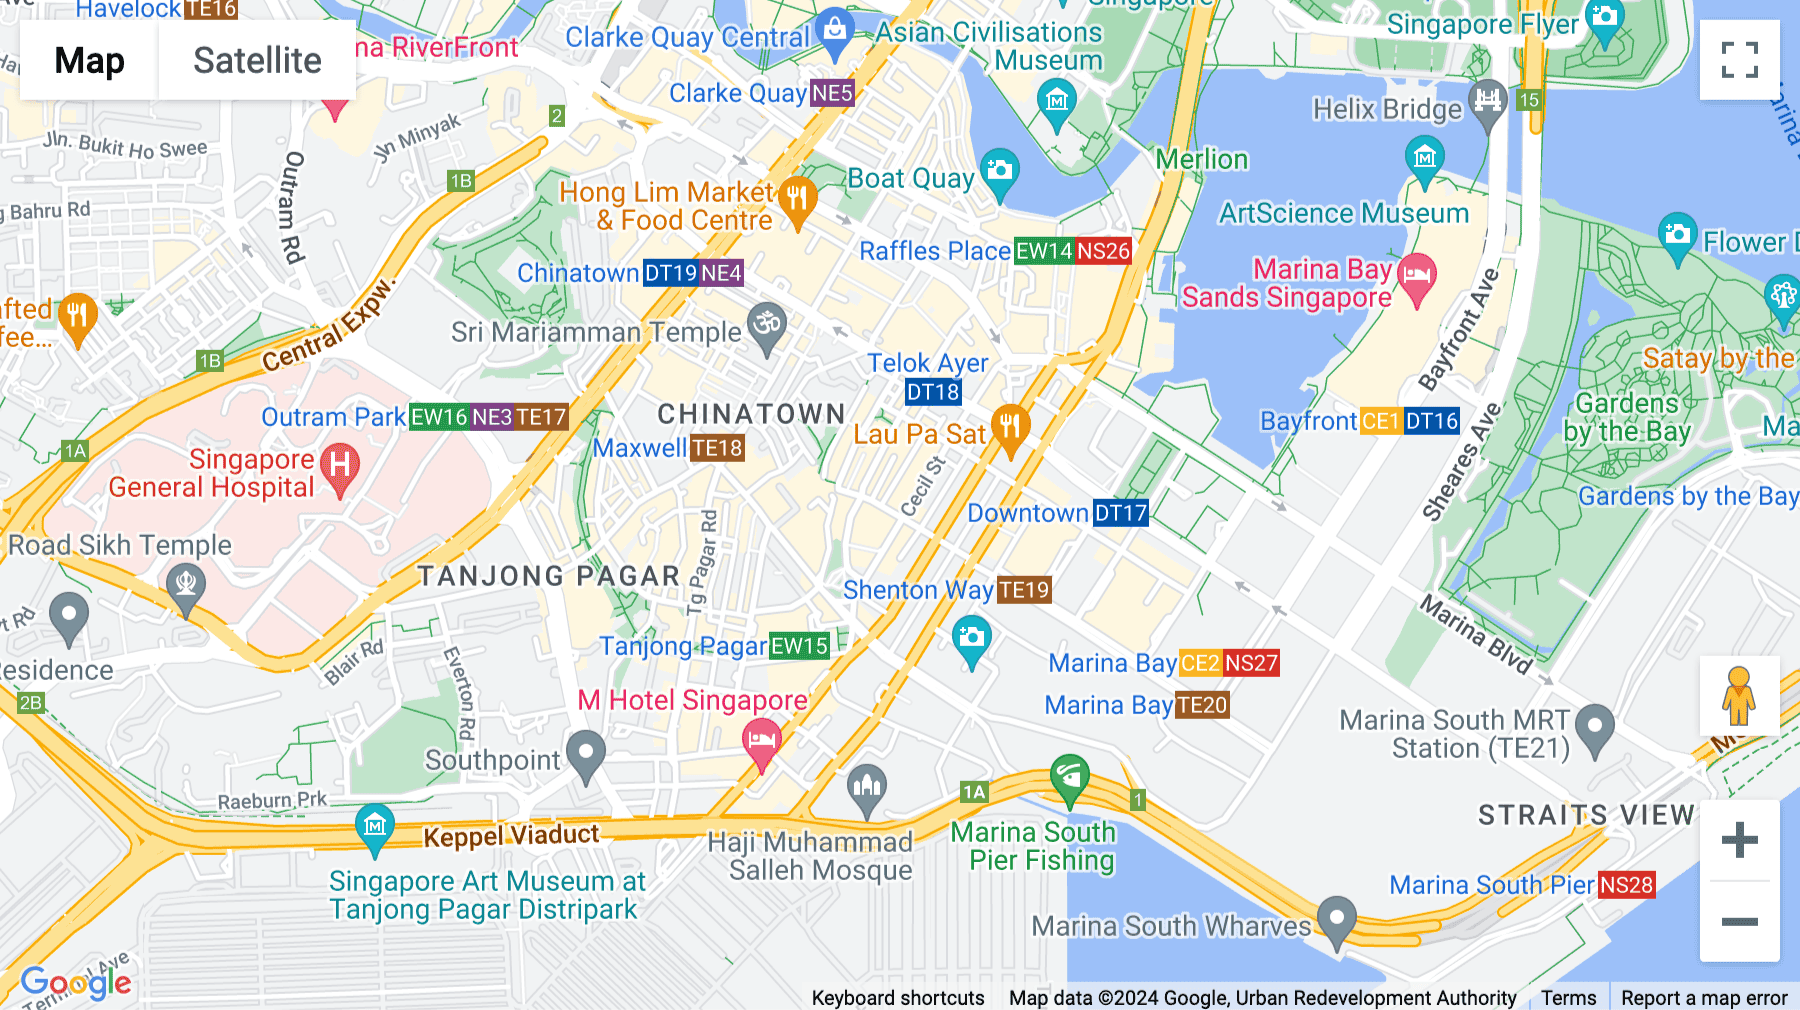 Click for interative map of Tokio Marine Centre, 20 McCallum Street, Level 19, Singapore